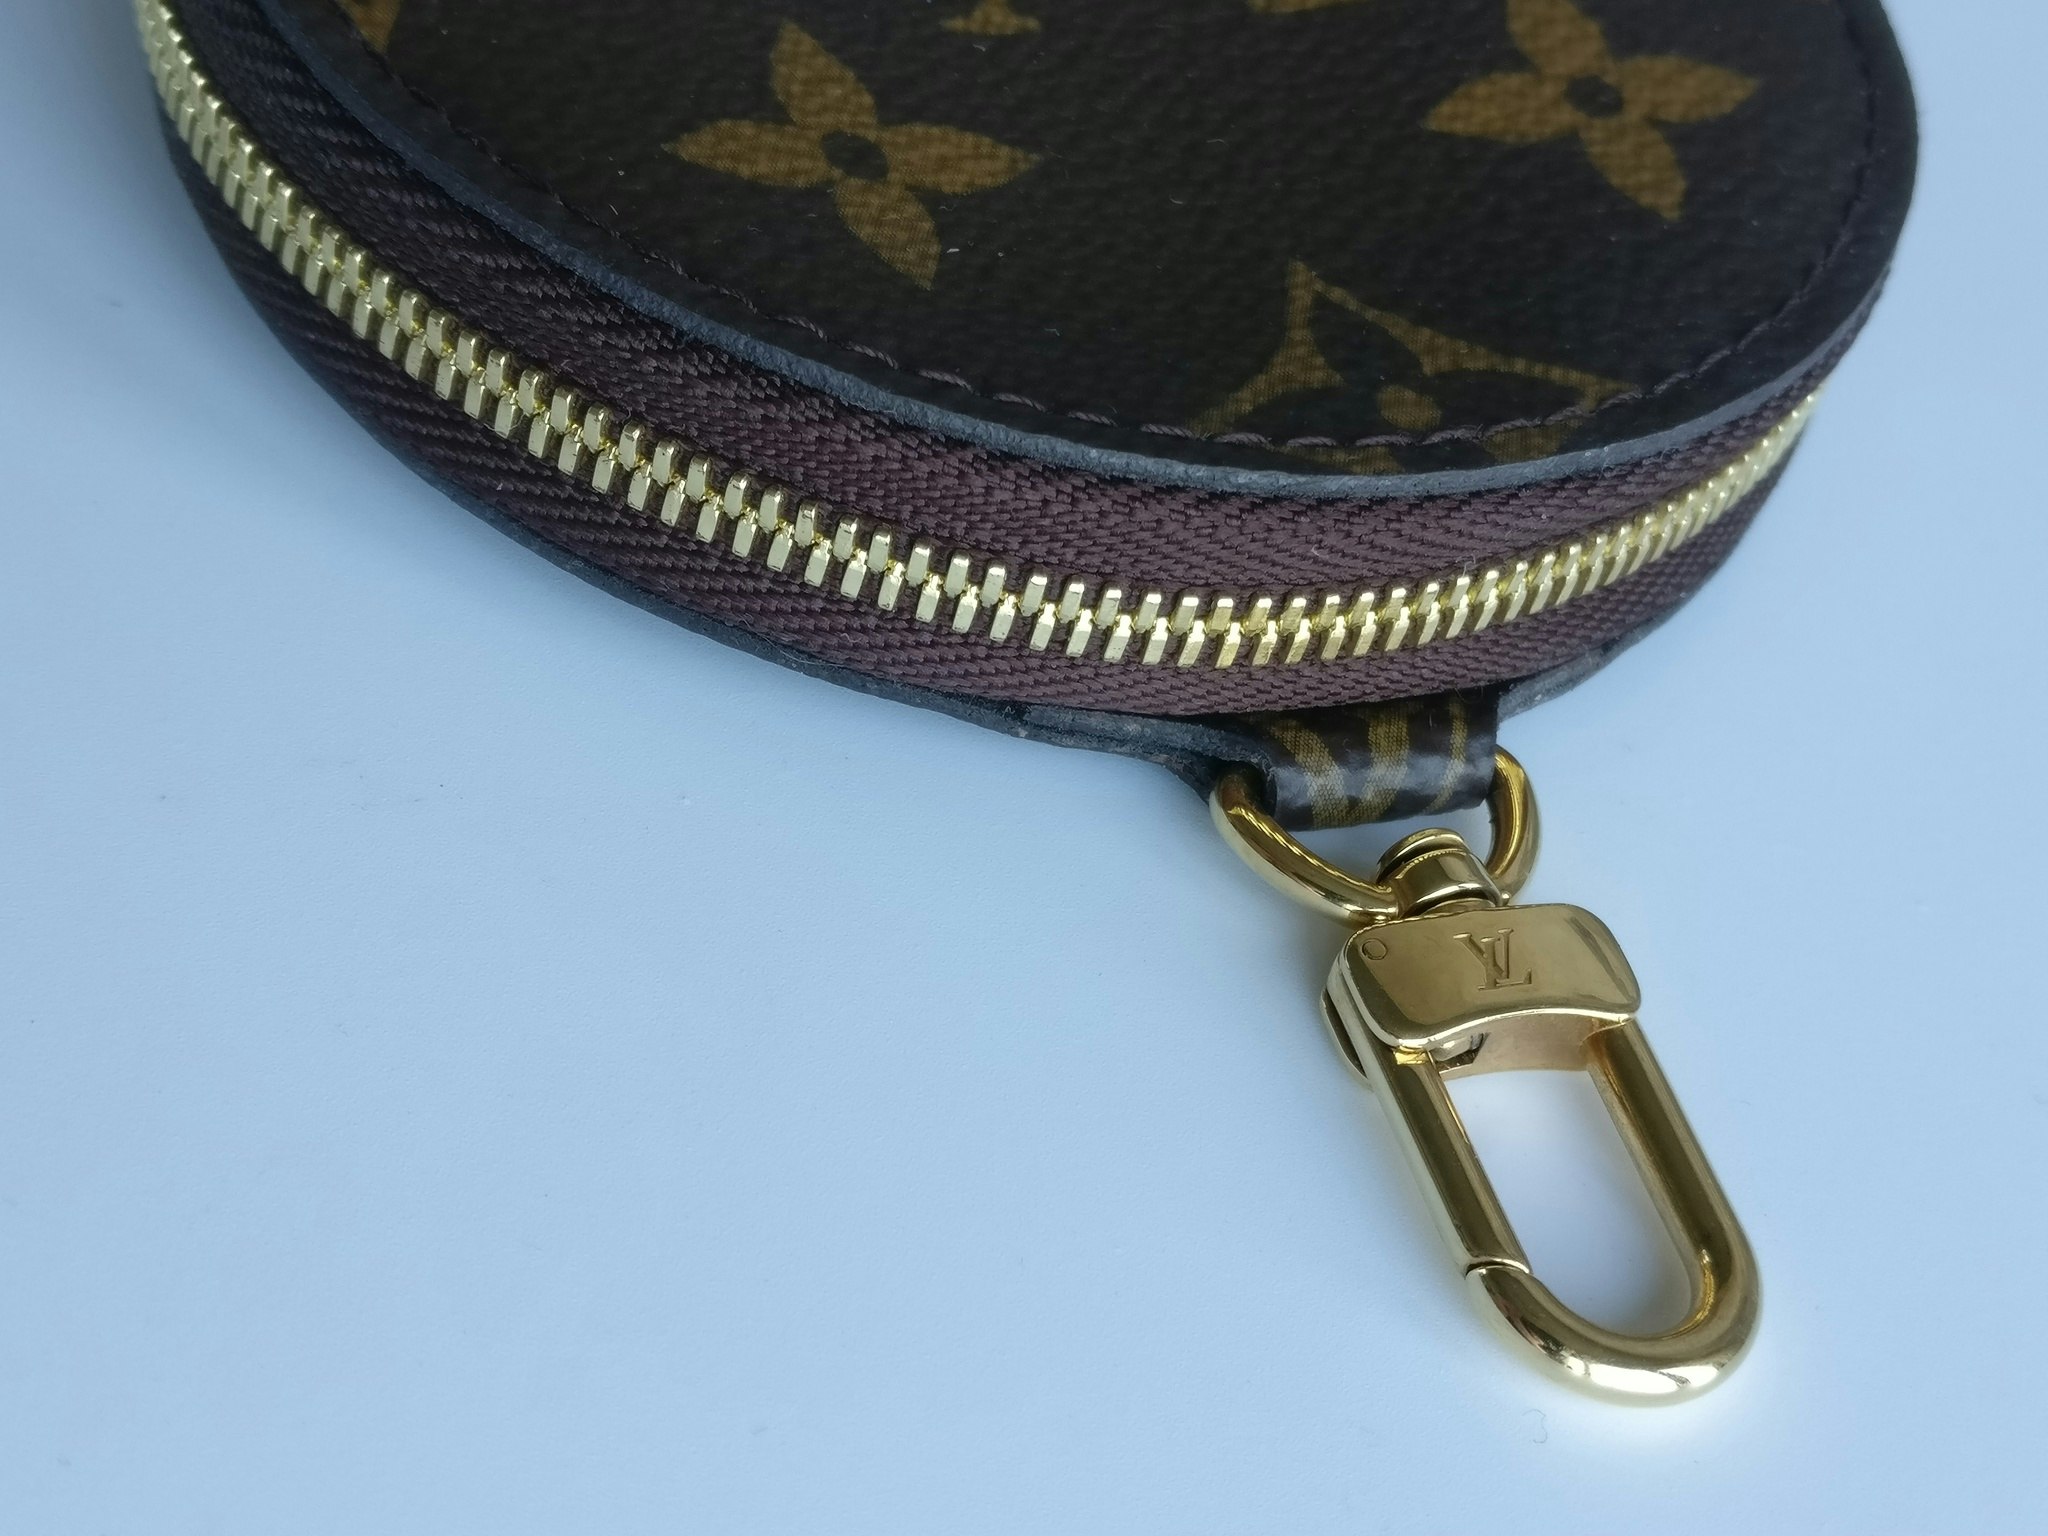 Multi Pochette Accessoires high quality luxury wallet mini purses